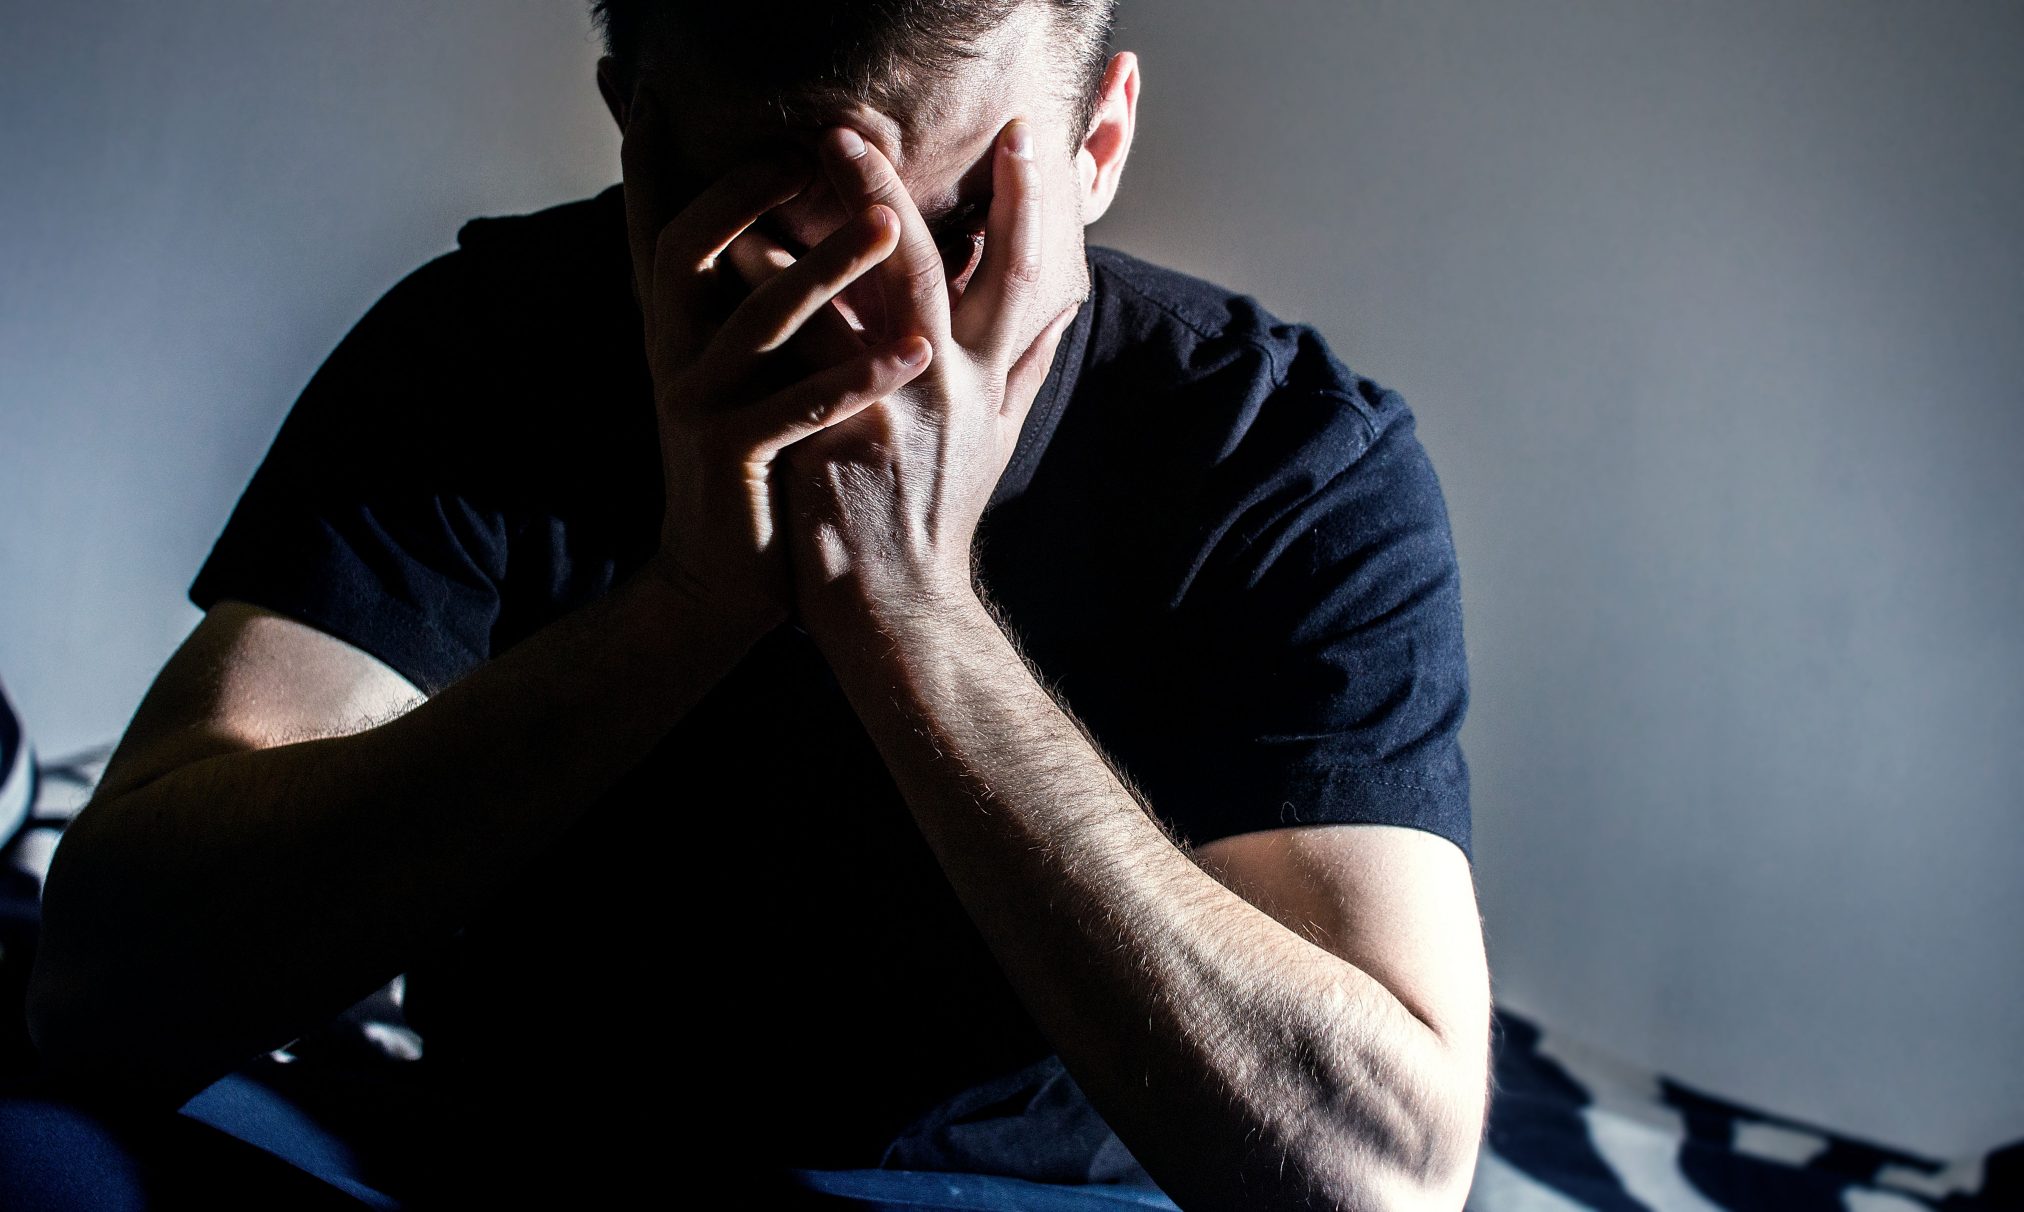 depressed man mental health depression anxiety PTSD